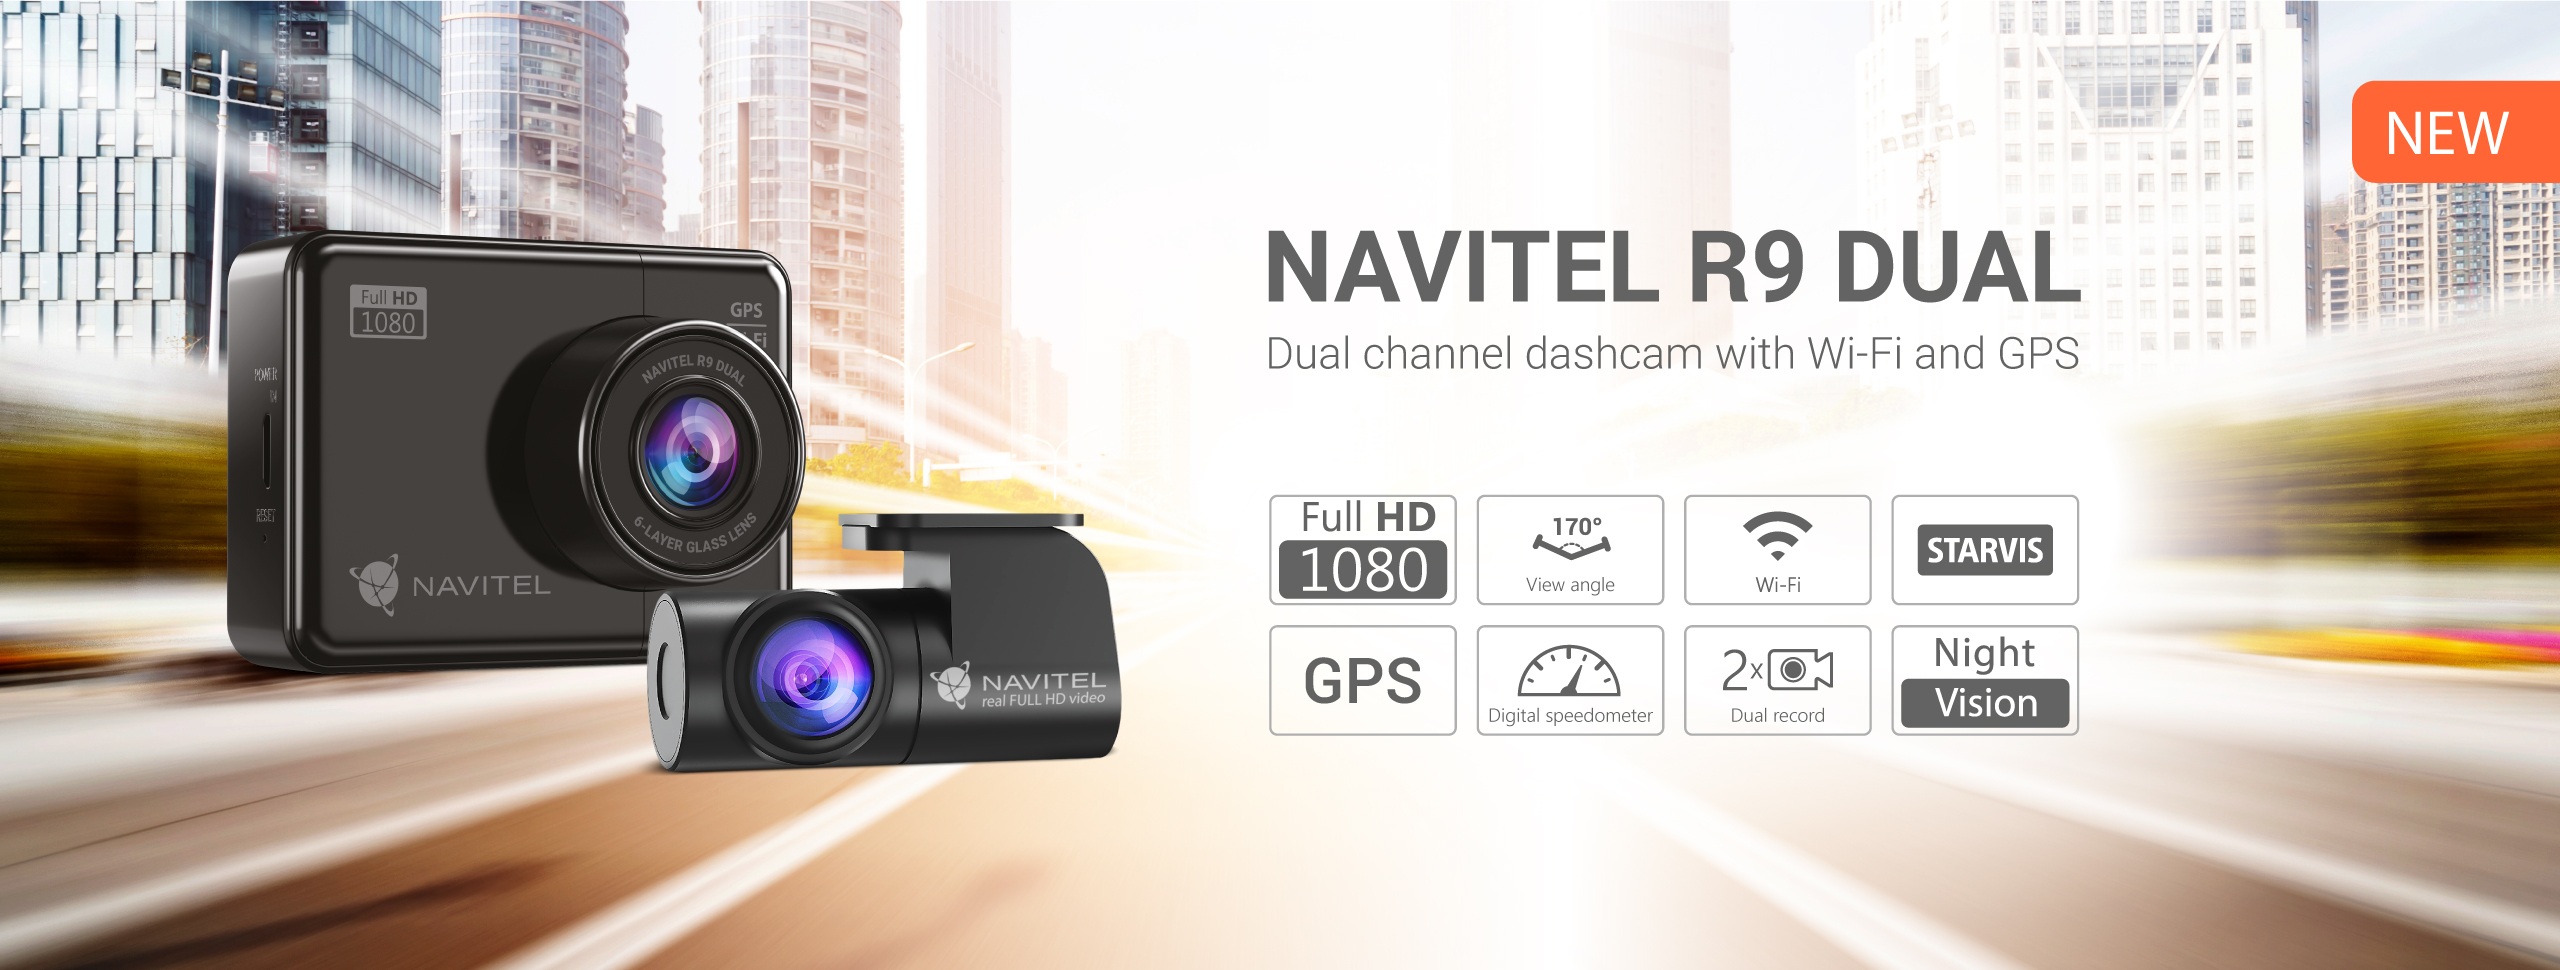 NAVITEL presents a new DVR model on the market - NAVITEL R9 DUAL